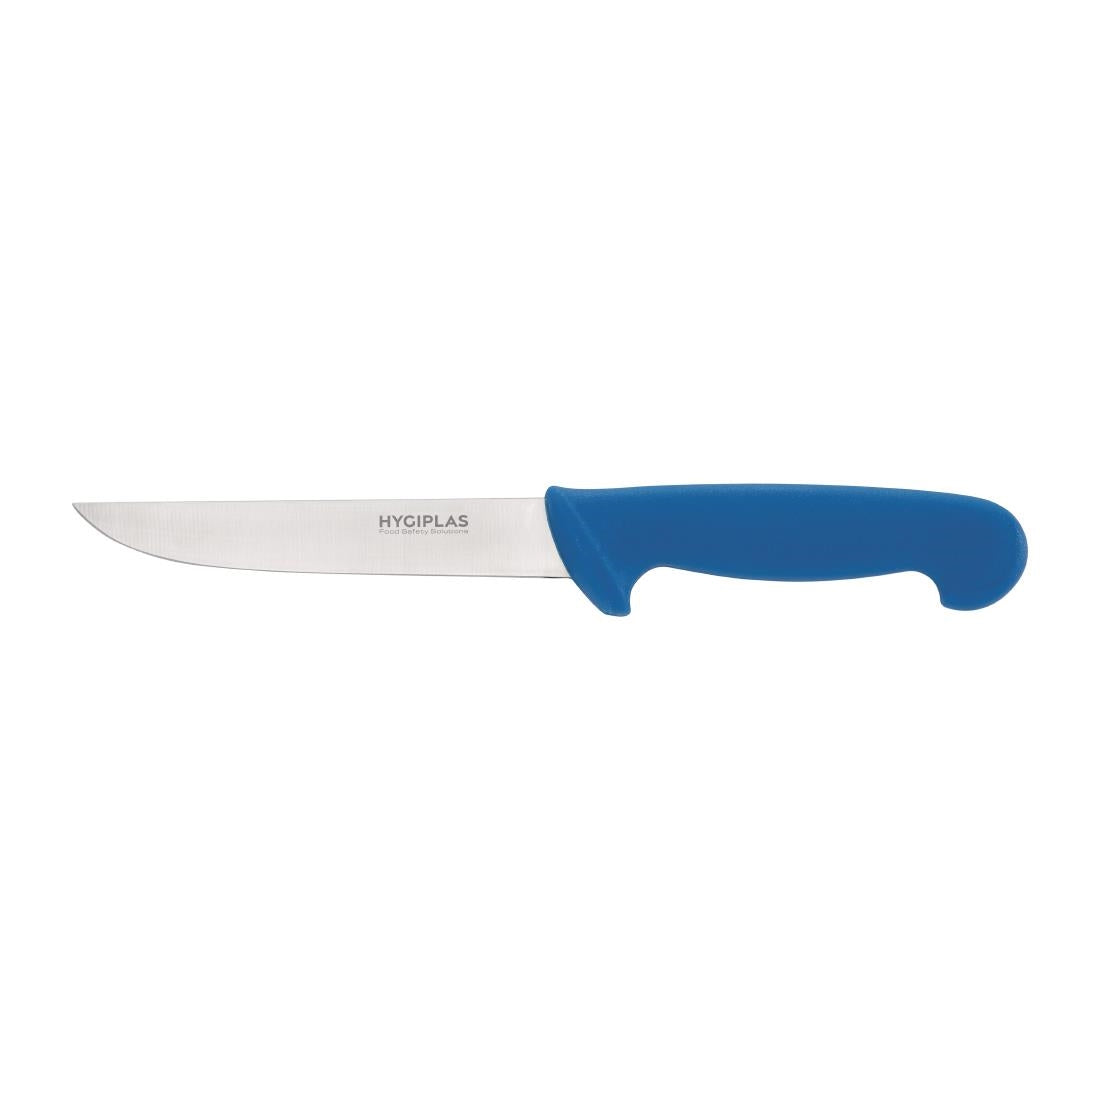 C854 Hygiplas Stiff Blade Boning Knife Blue 15cm JD Catering Equipment Solutions Ltd